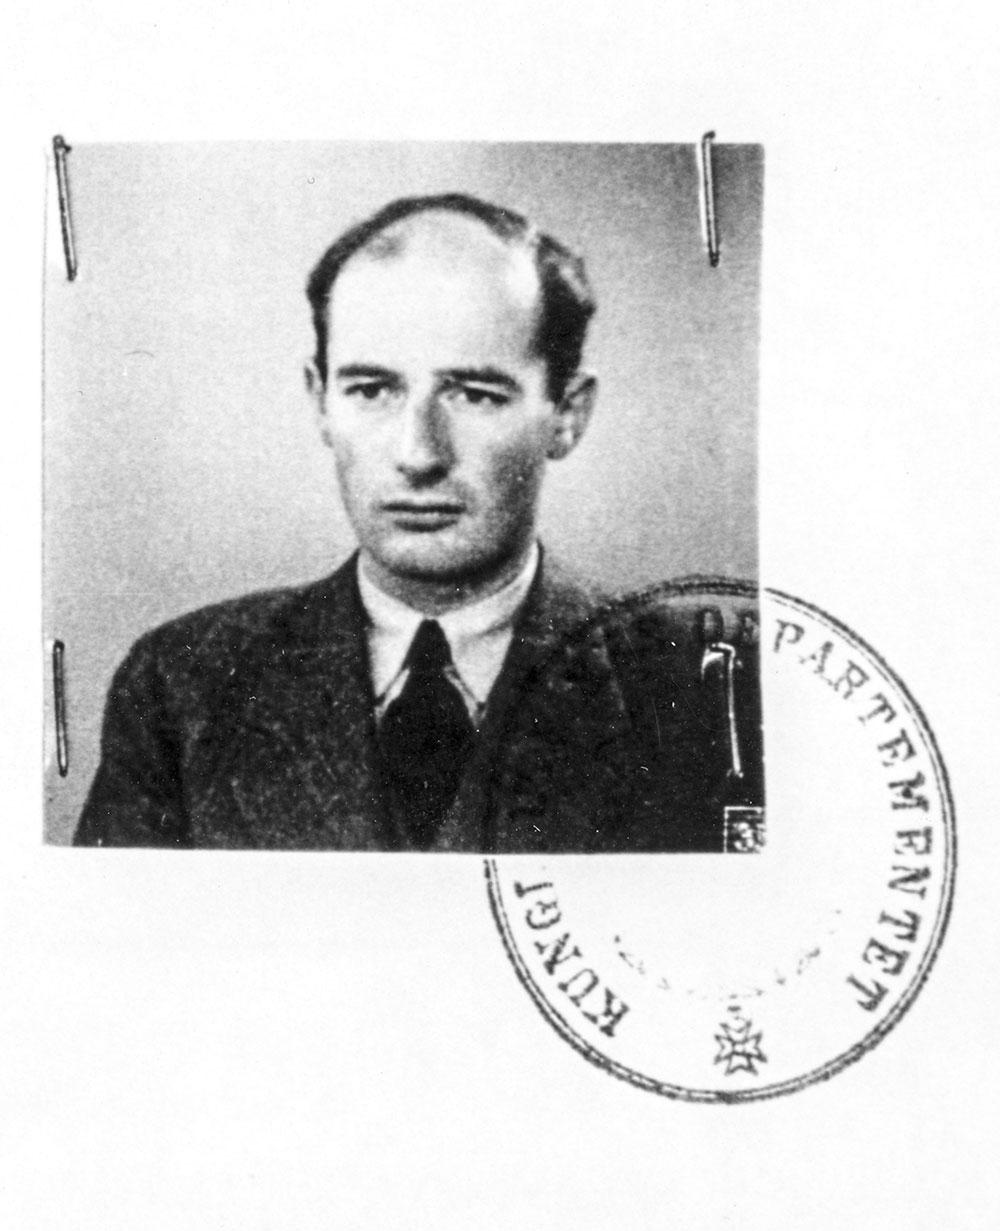 Passbild på Raoul Wallenberg.